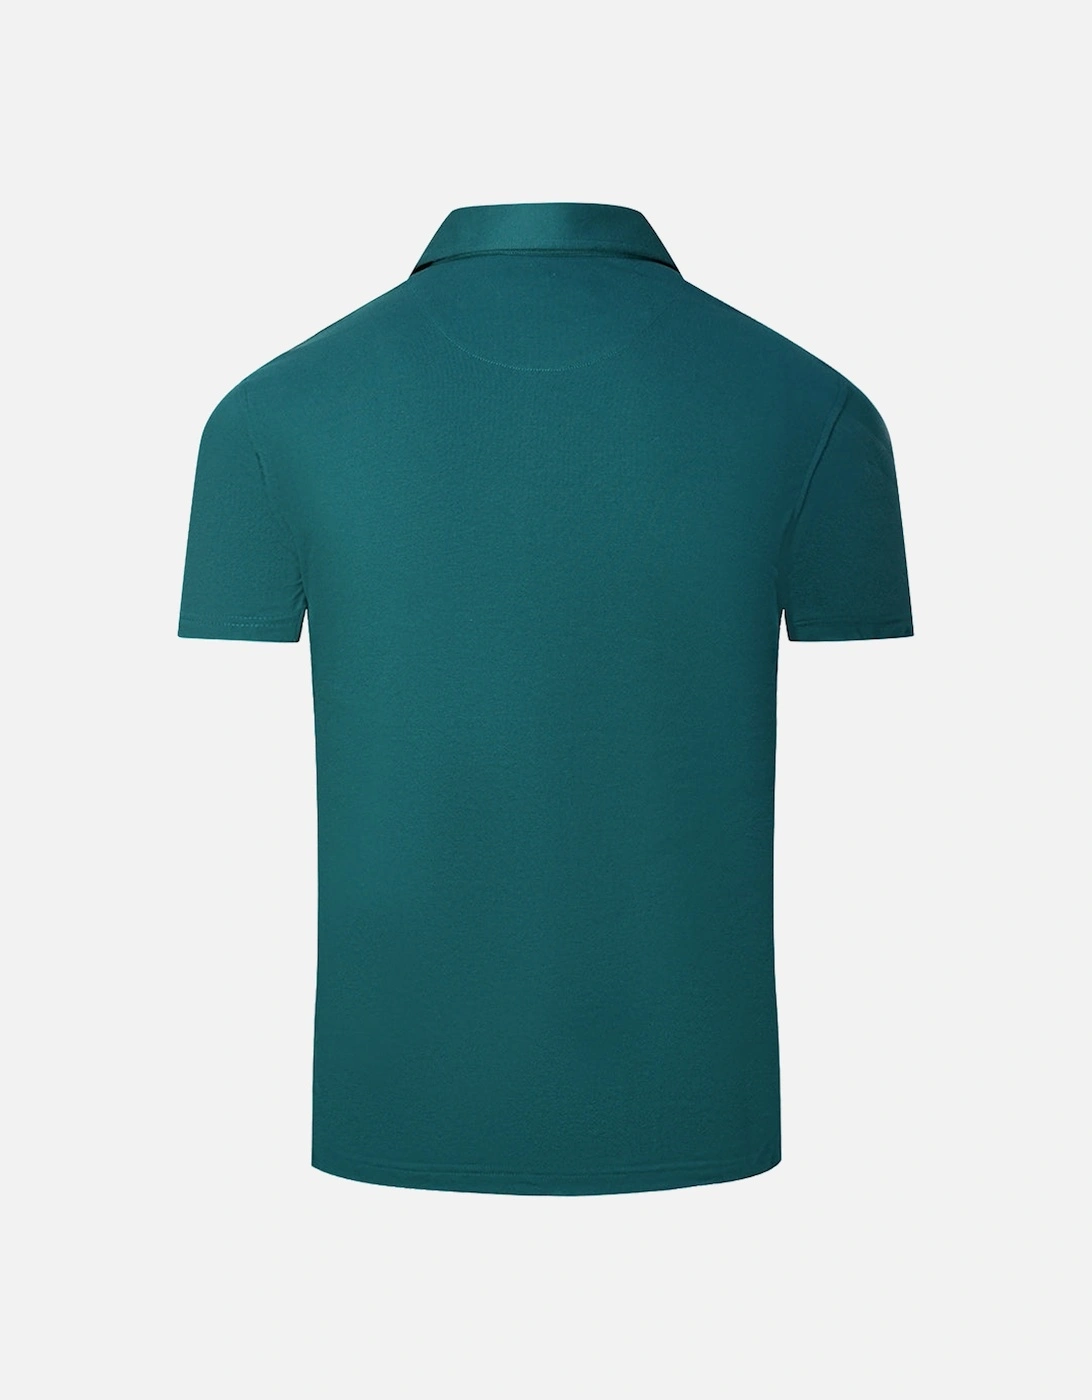 Aldis London Logo Green Polo Shirt